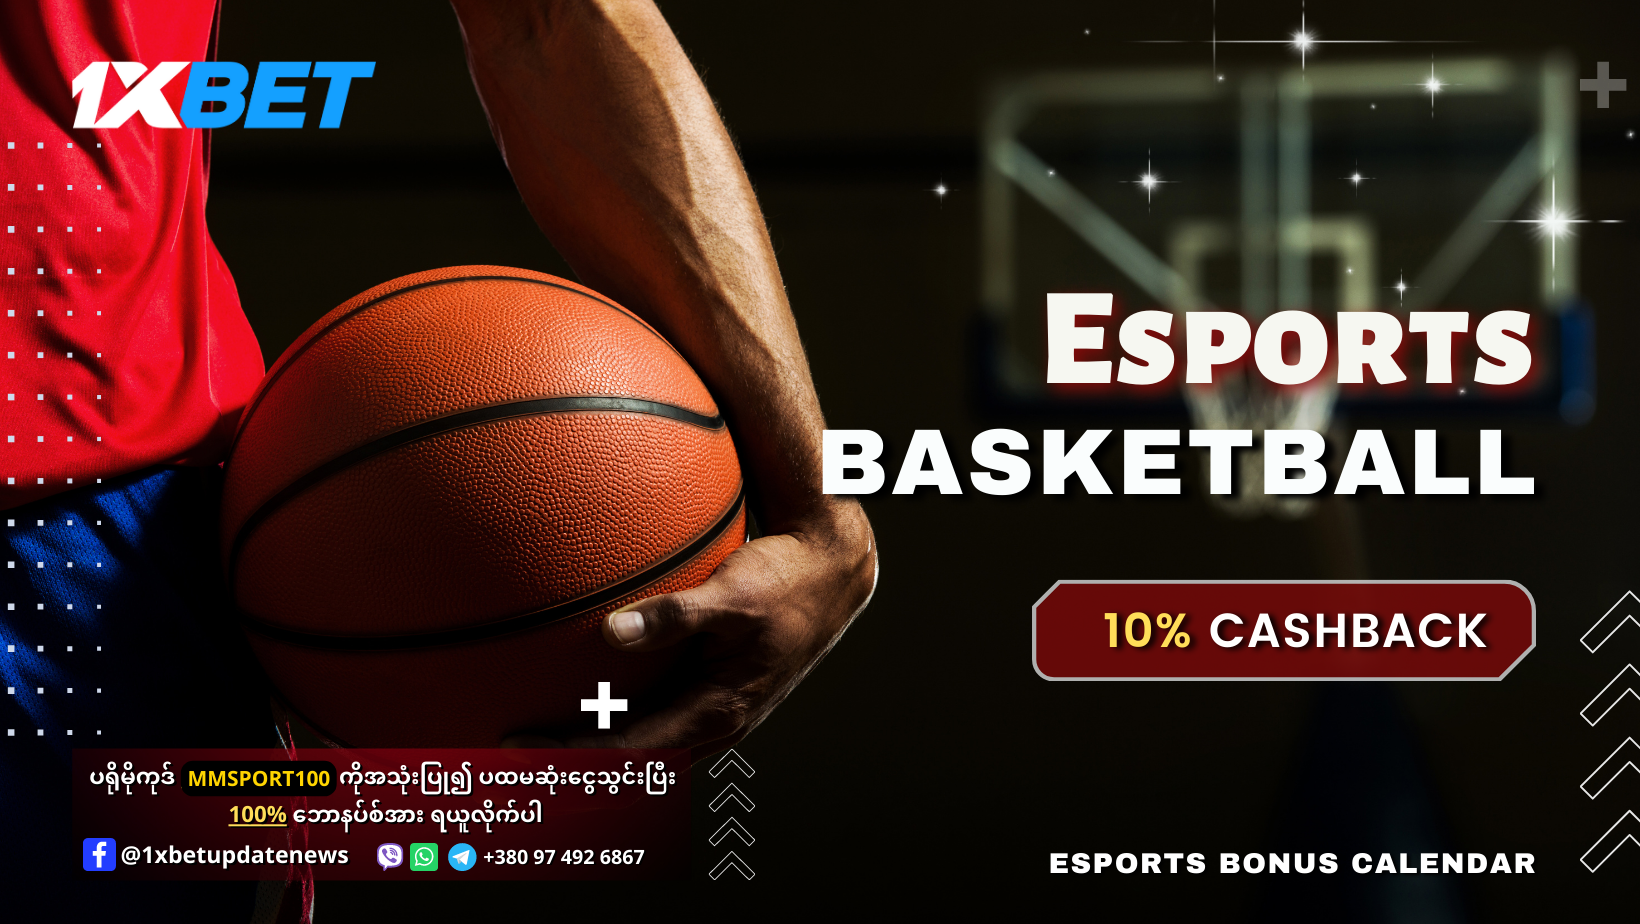 Esport Basketball Promotion